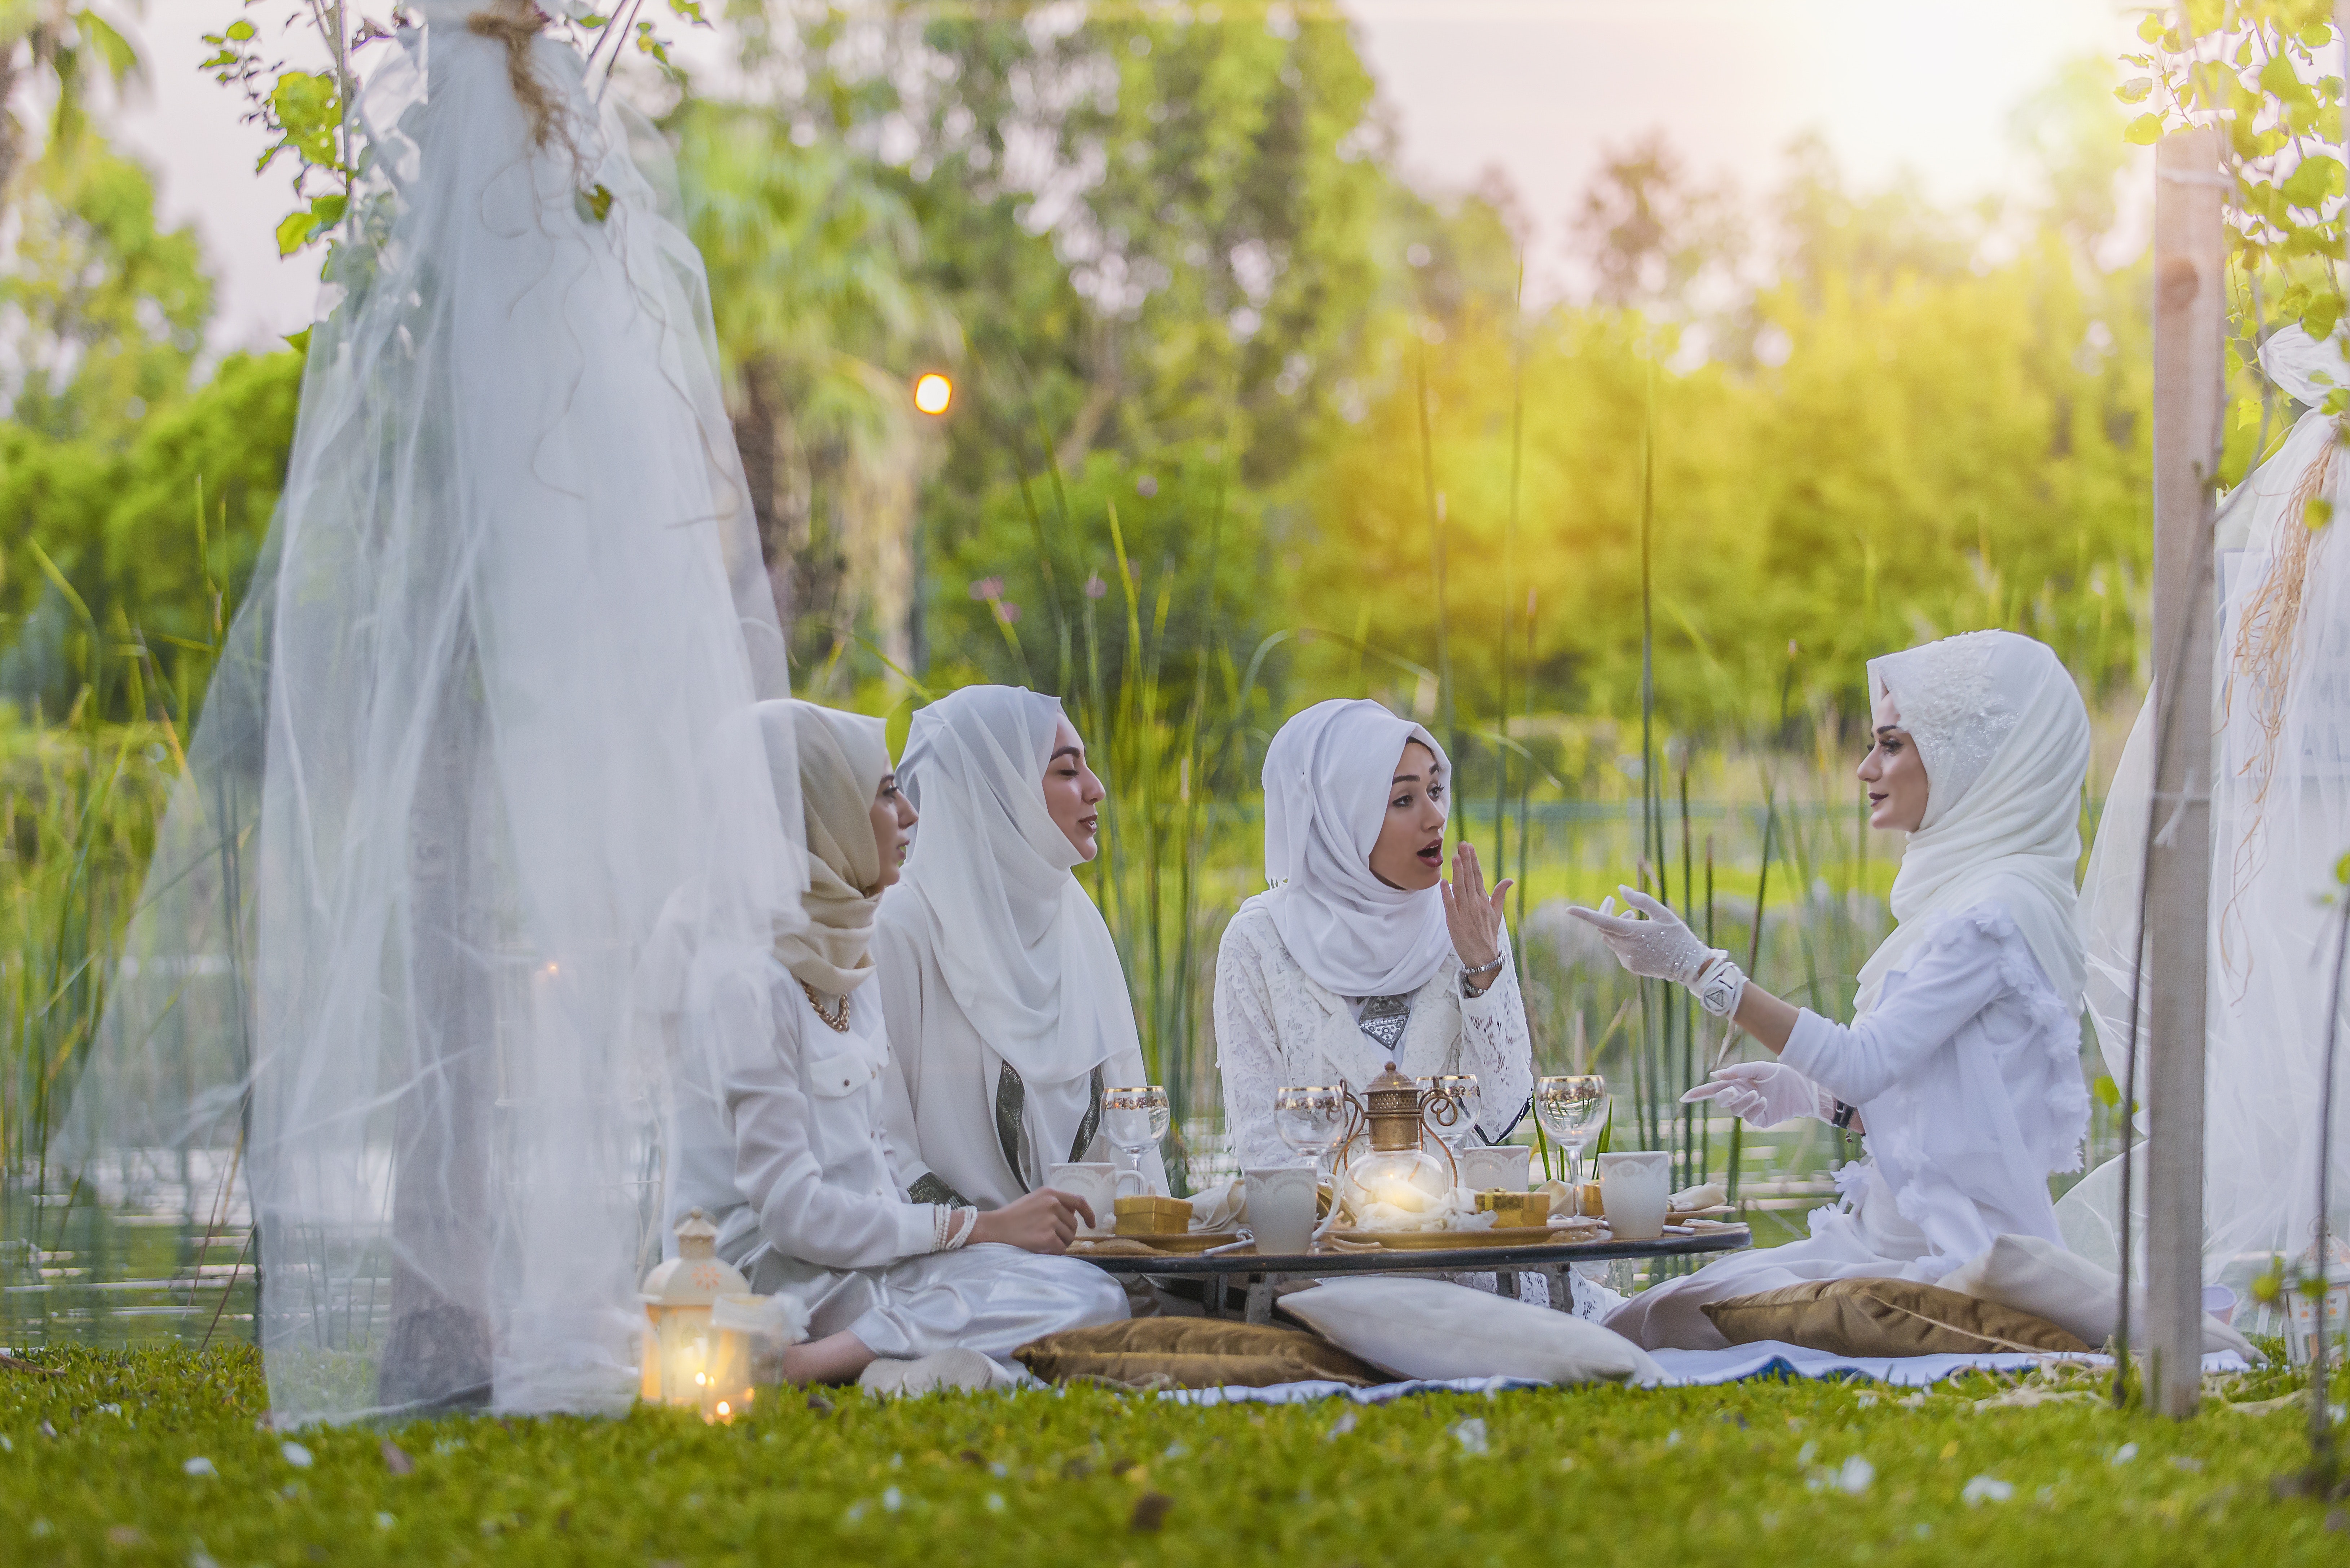 4 women in white abaya wedding gown having picnic near trees photo